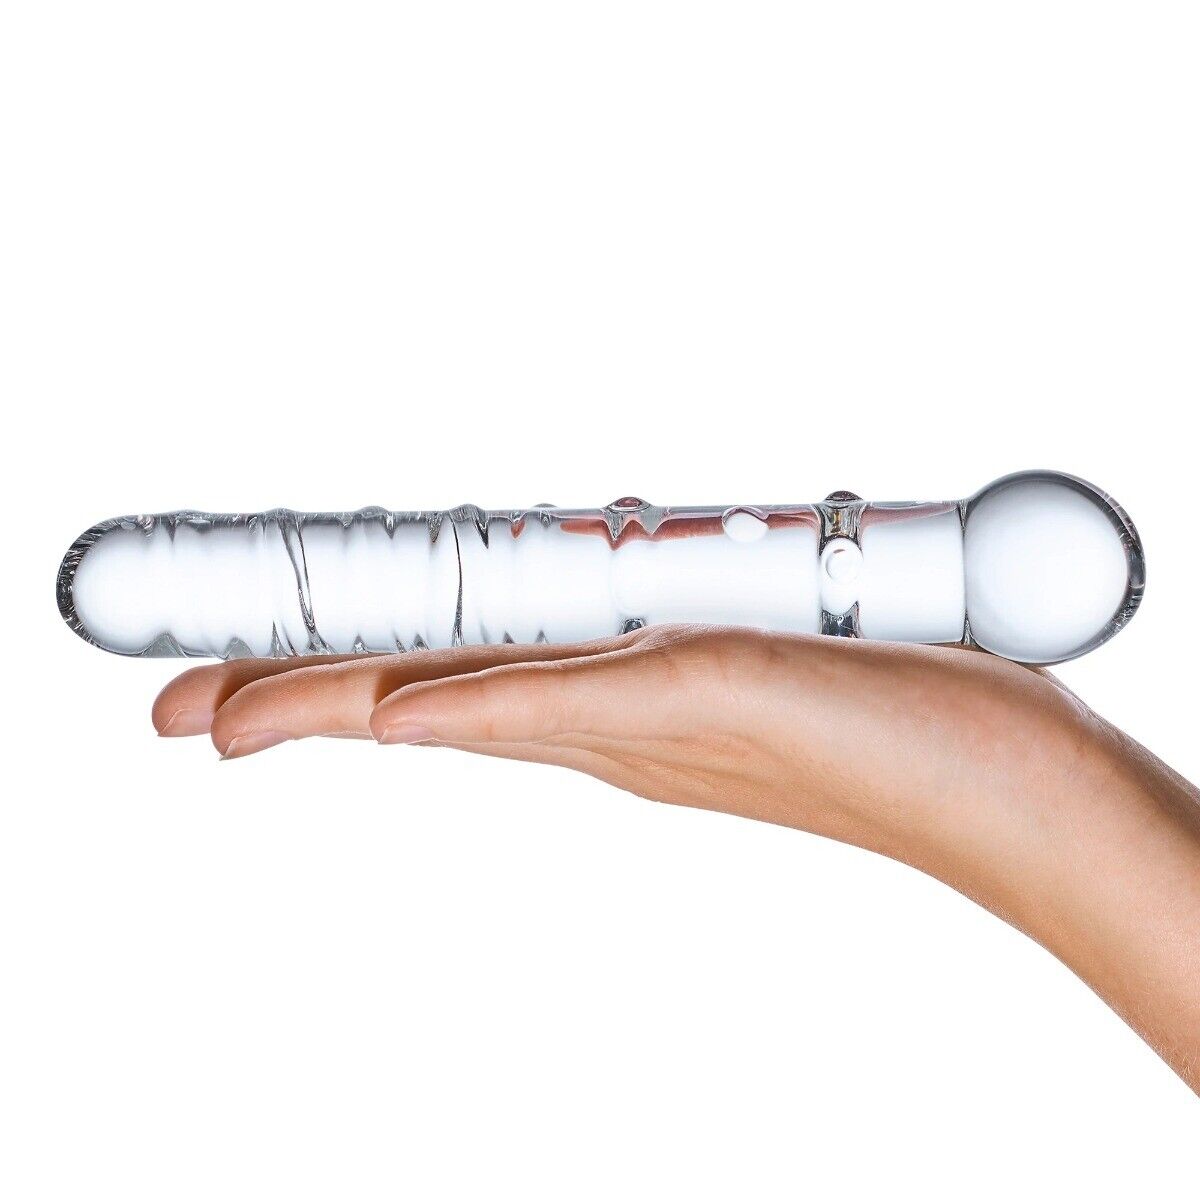 Spiraled Nubbed Glass G-spot Anal Massager Dildo Sex Toys for Men Women Couples